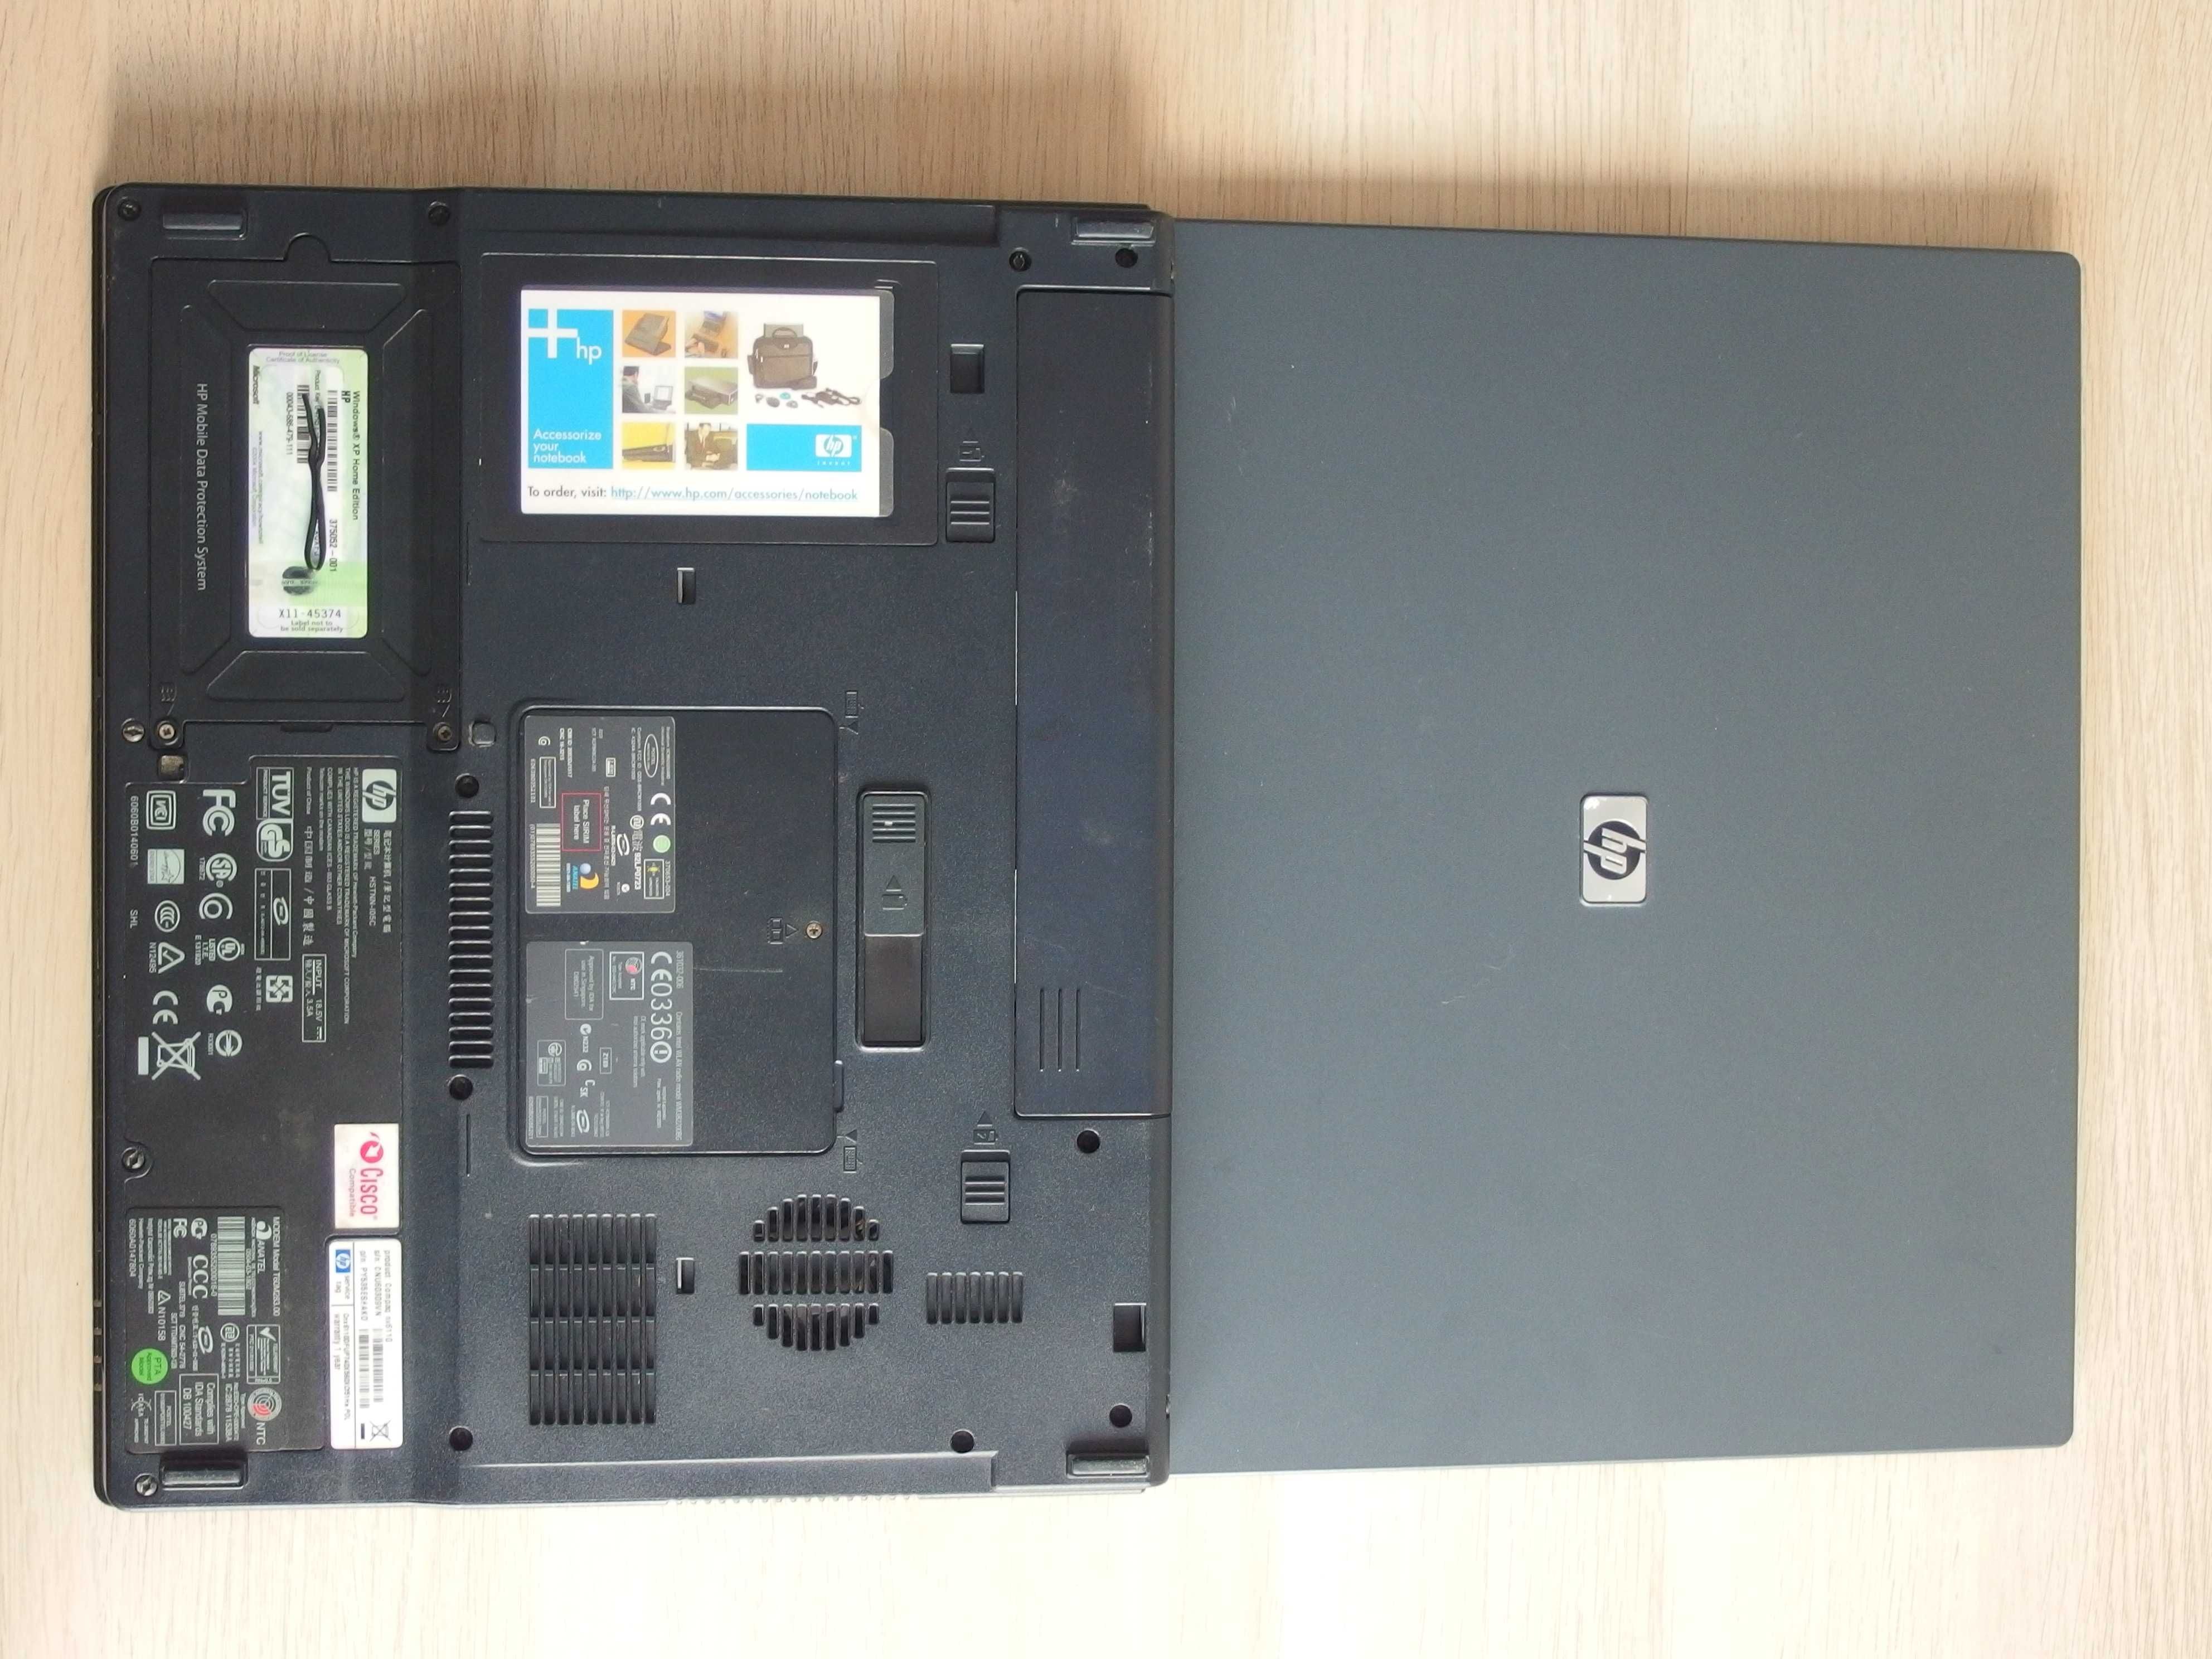 Laptop HP Windows XP win Optimus Pascal retro